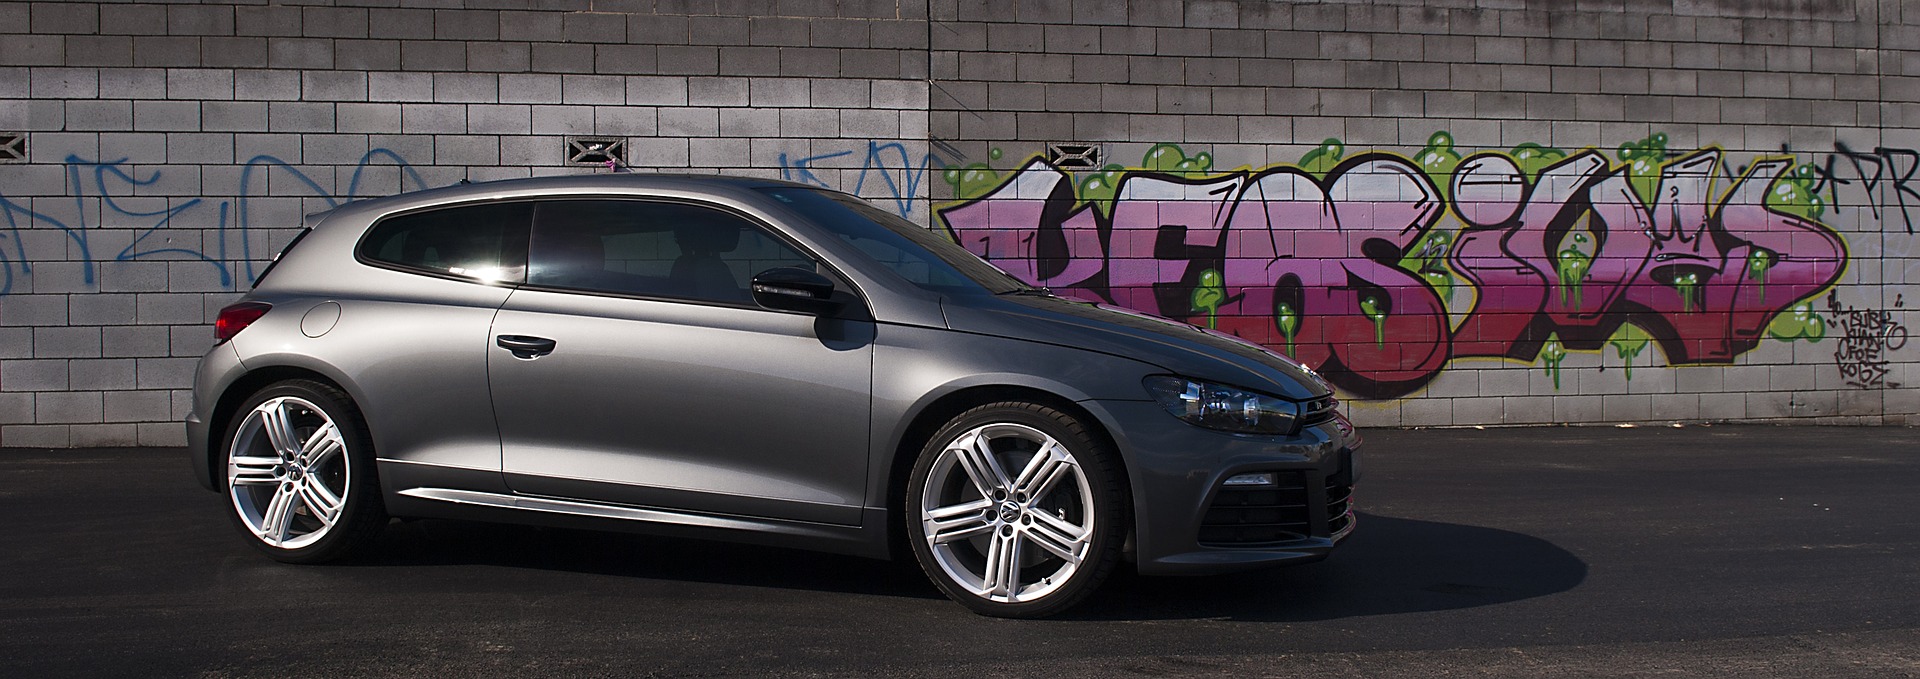 Volkswagen Scirocco against a graffiti background